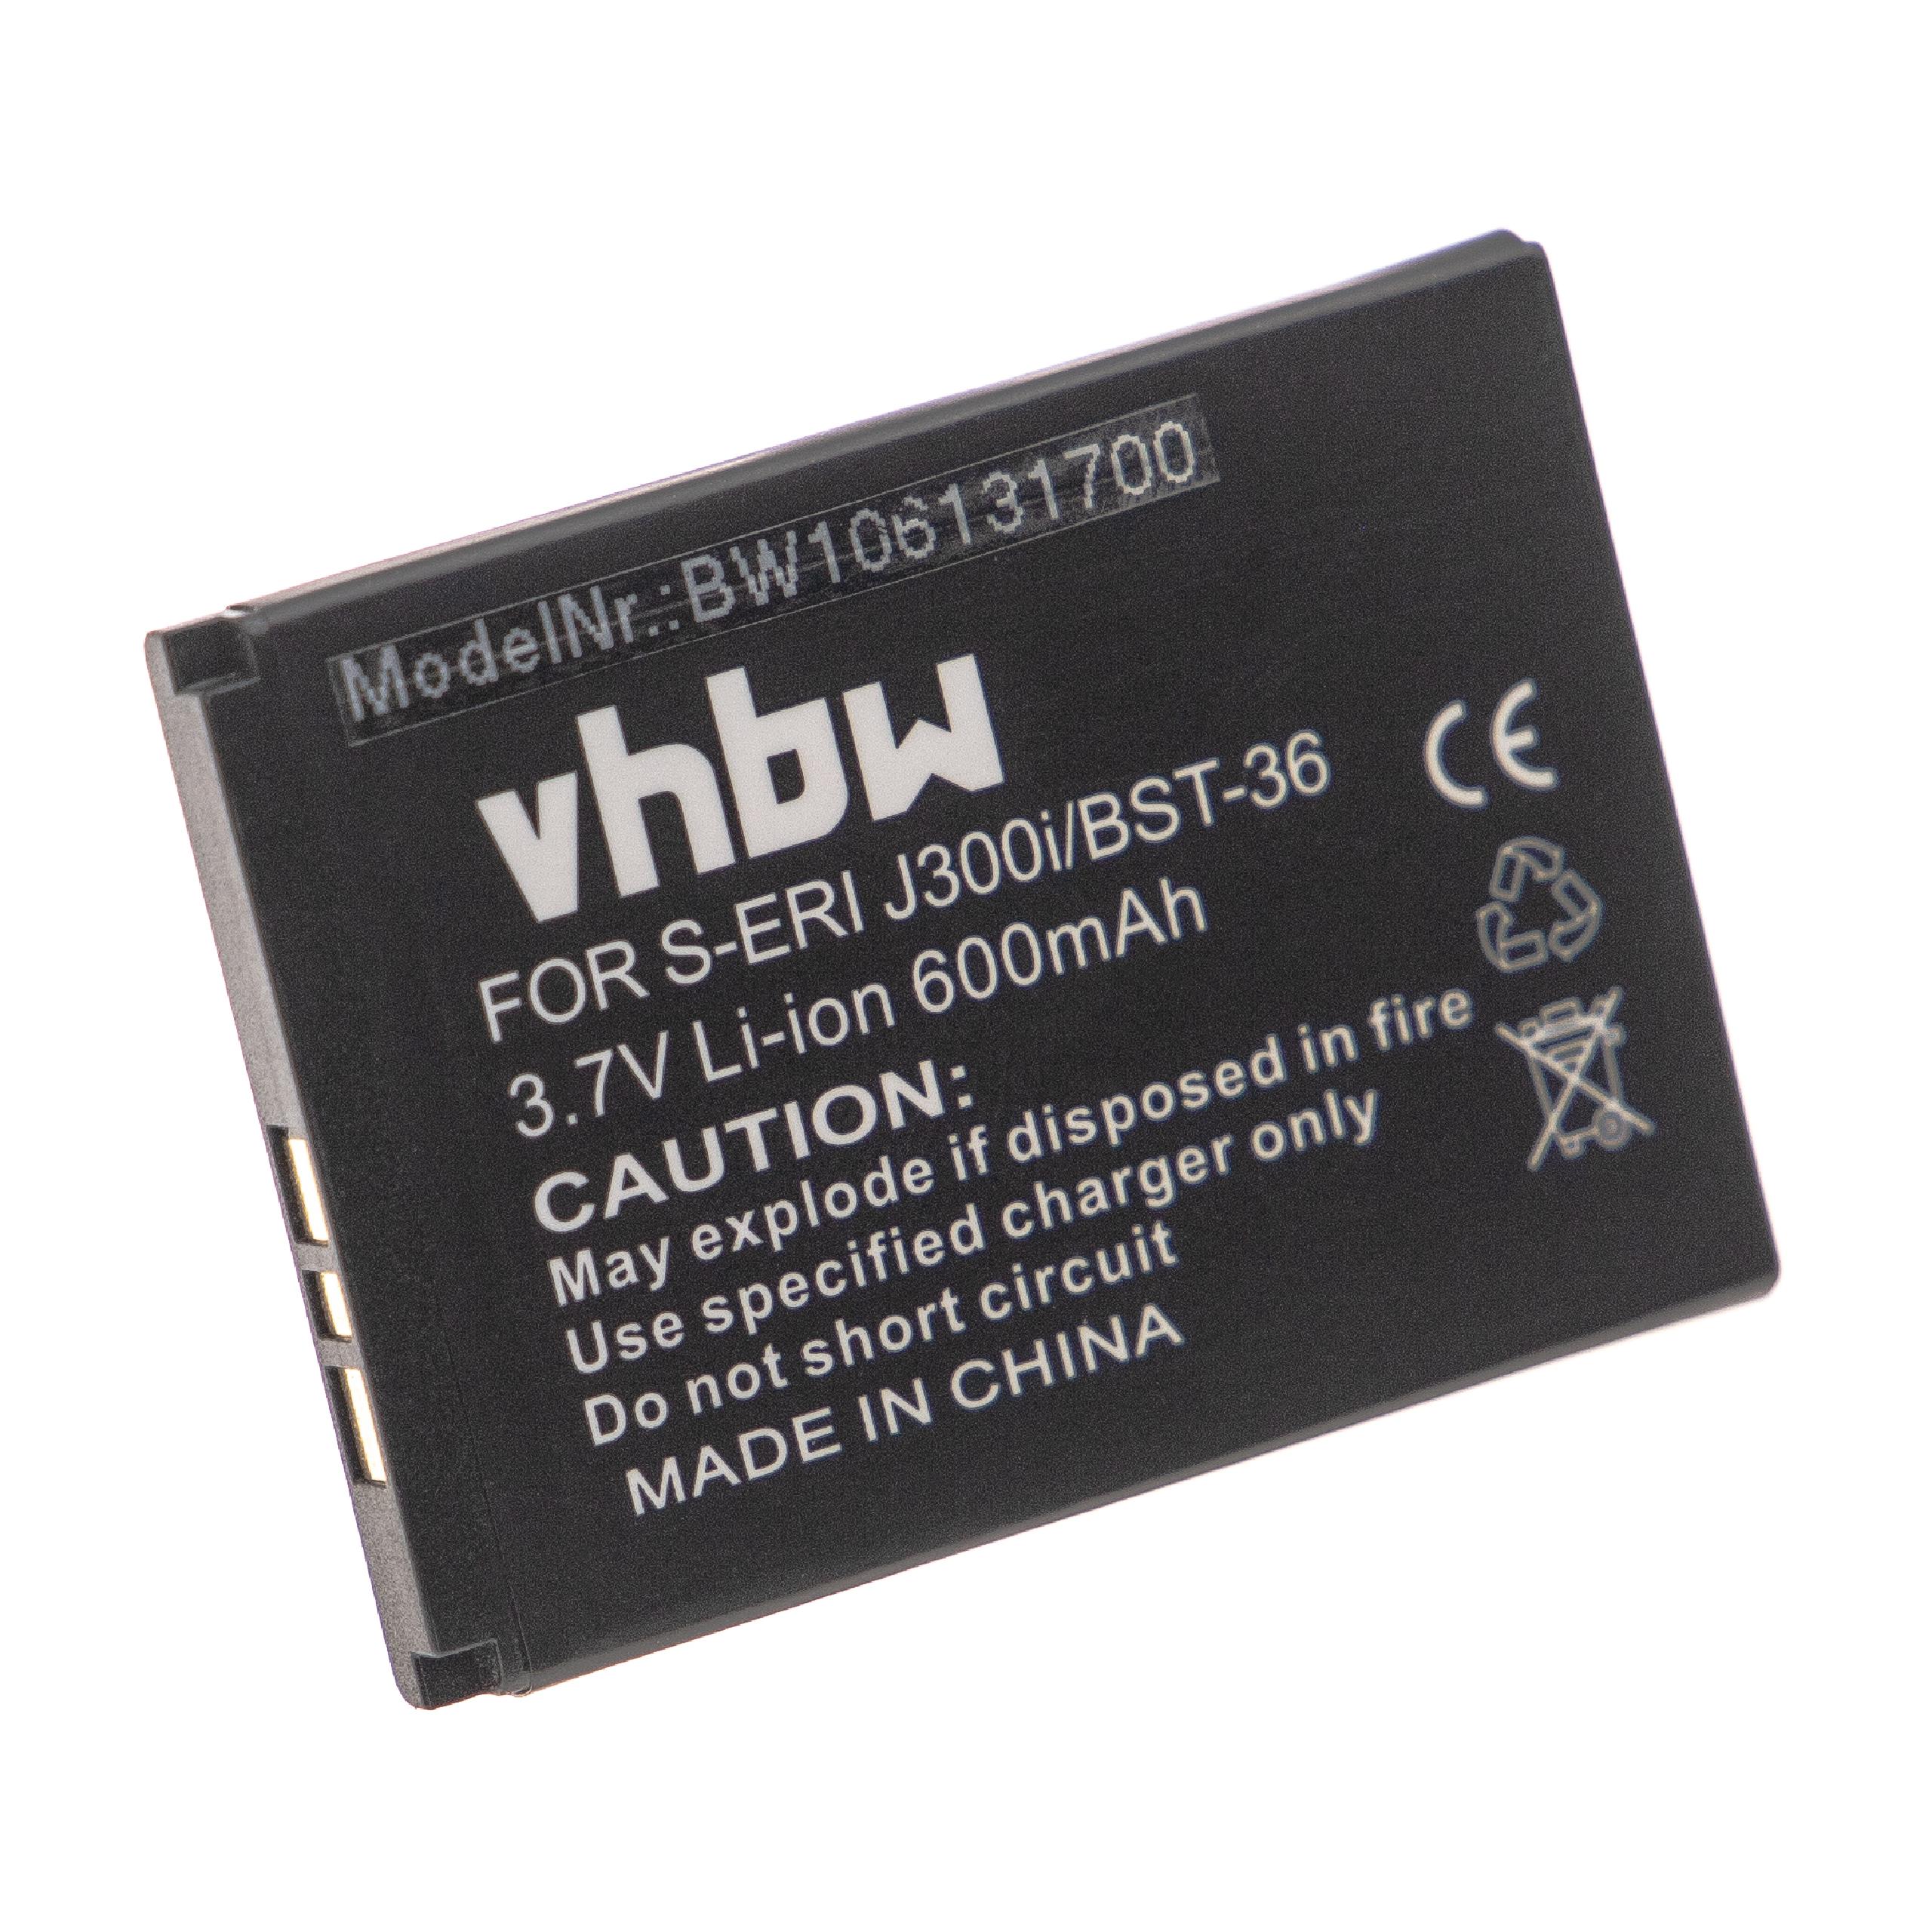 Batteria sostituisce Sony BST-36 per cellulare Sony-Ericsson - 600mAh 3,7V Li-Ion